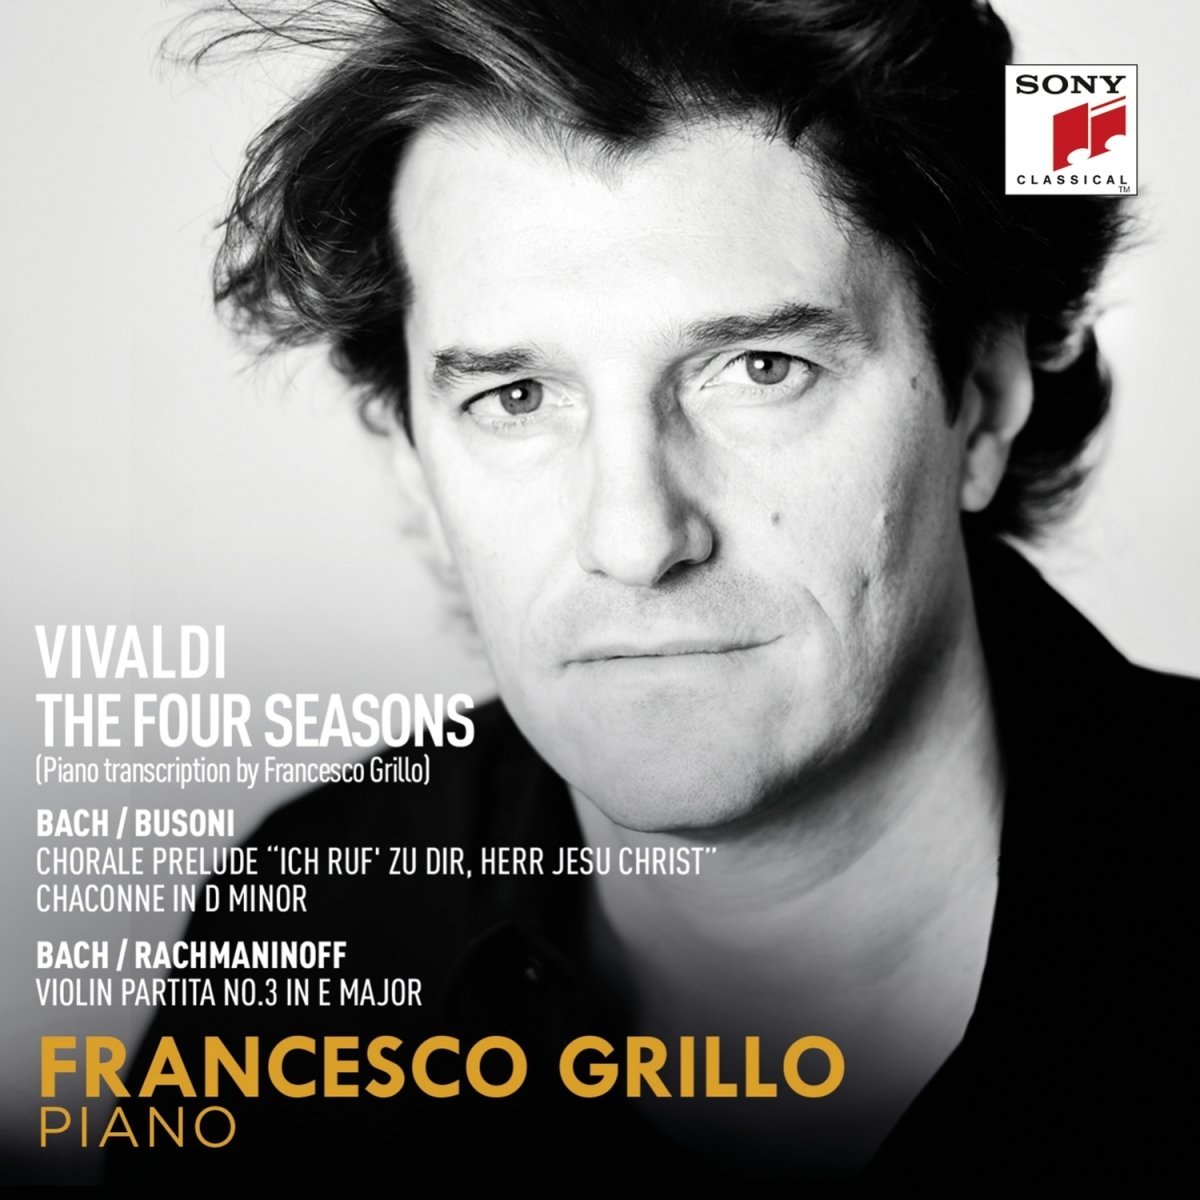 The Four Seasons Francesco Grillo